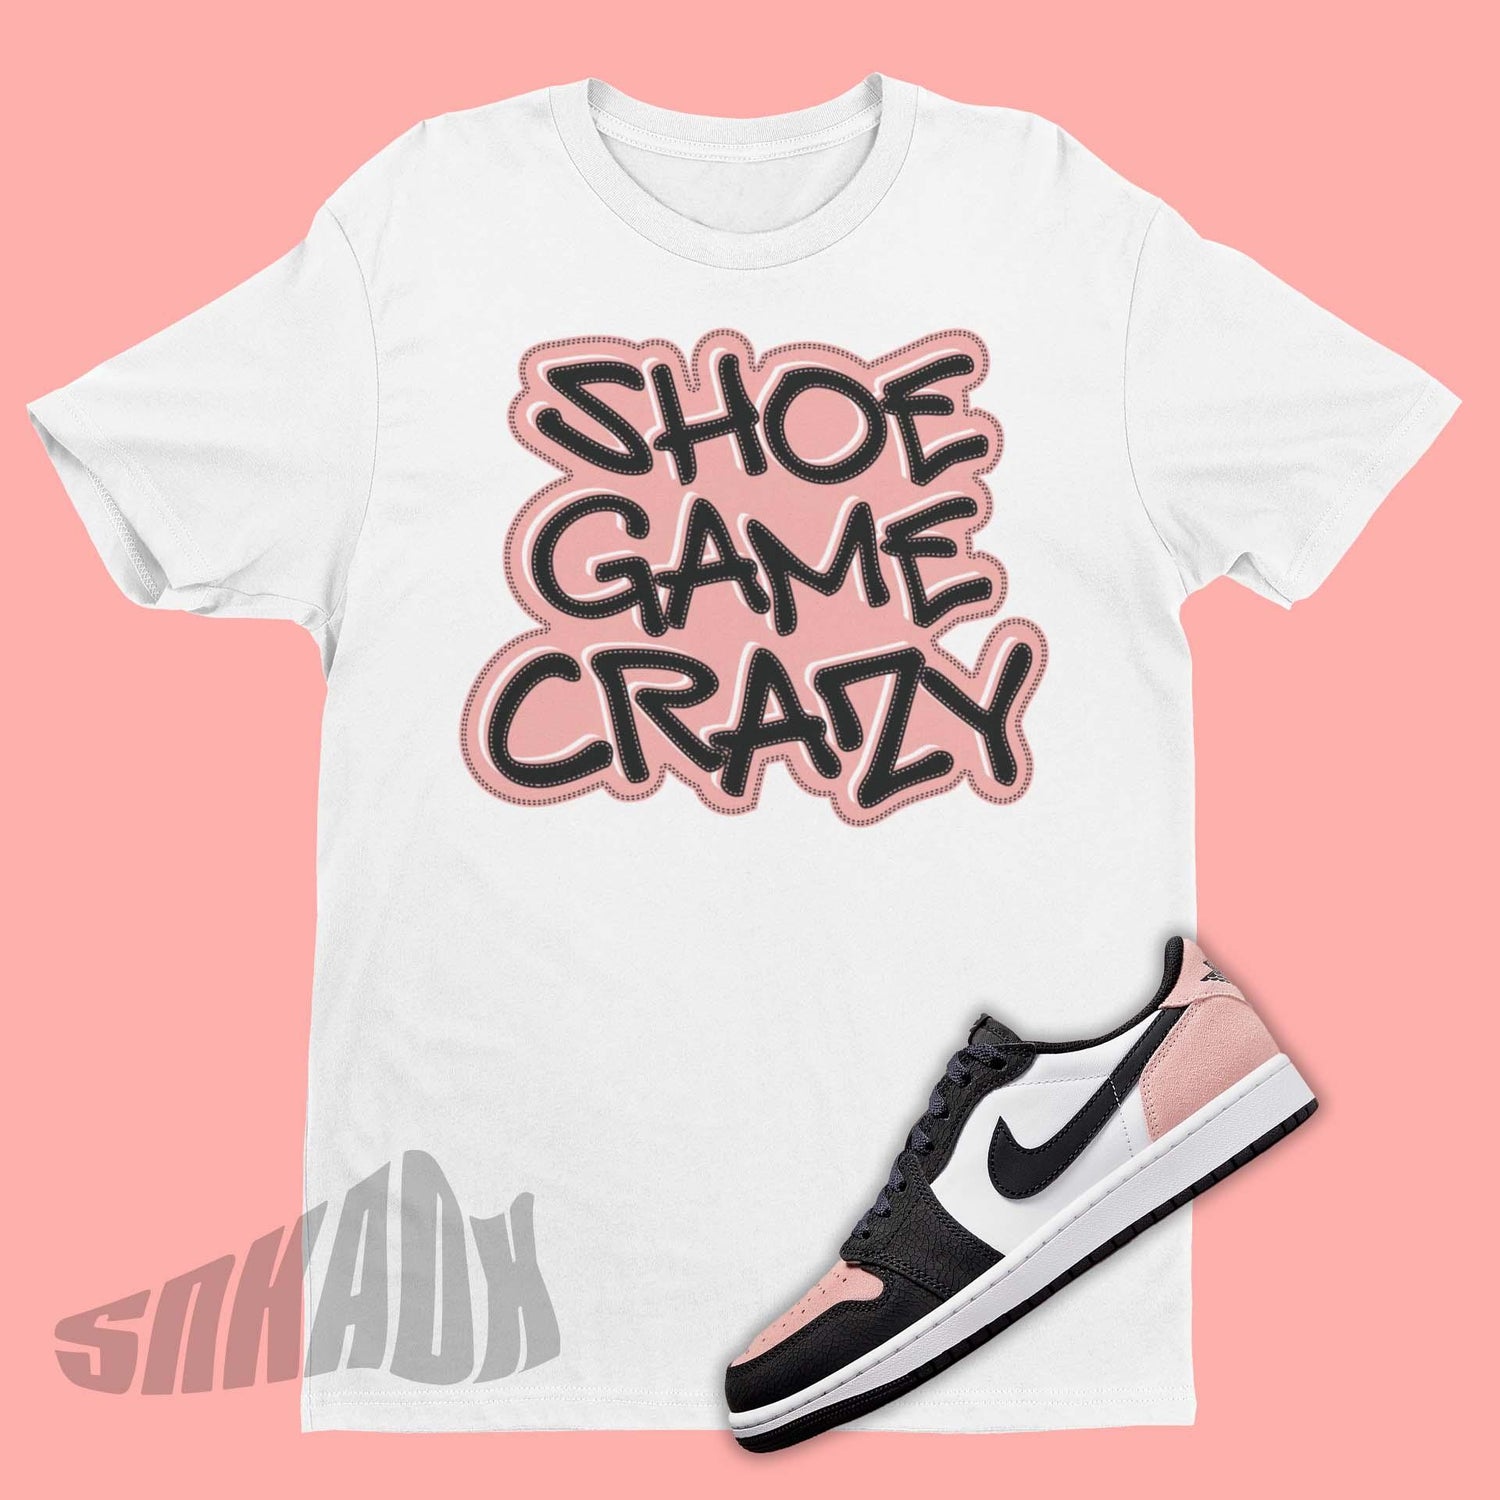 Shoe Game Crazy Shirt To Match Air Jordan 1 Bleached Coral